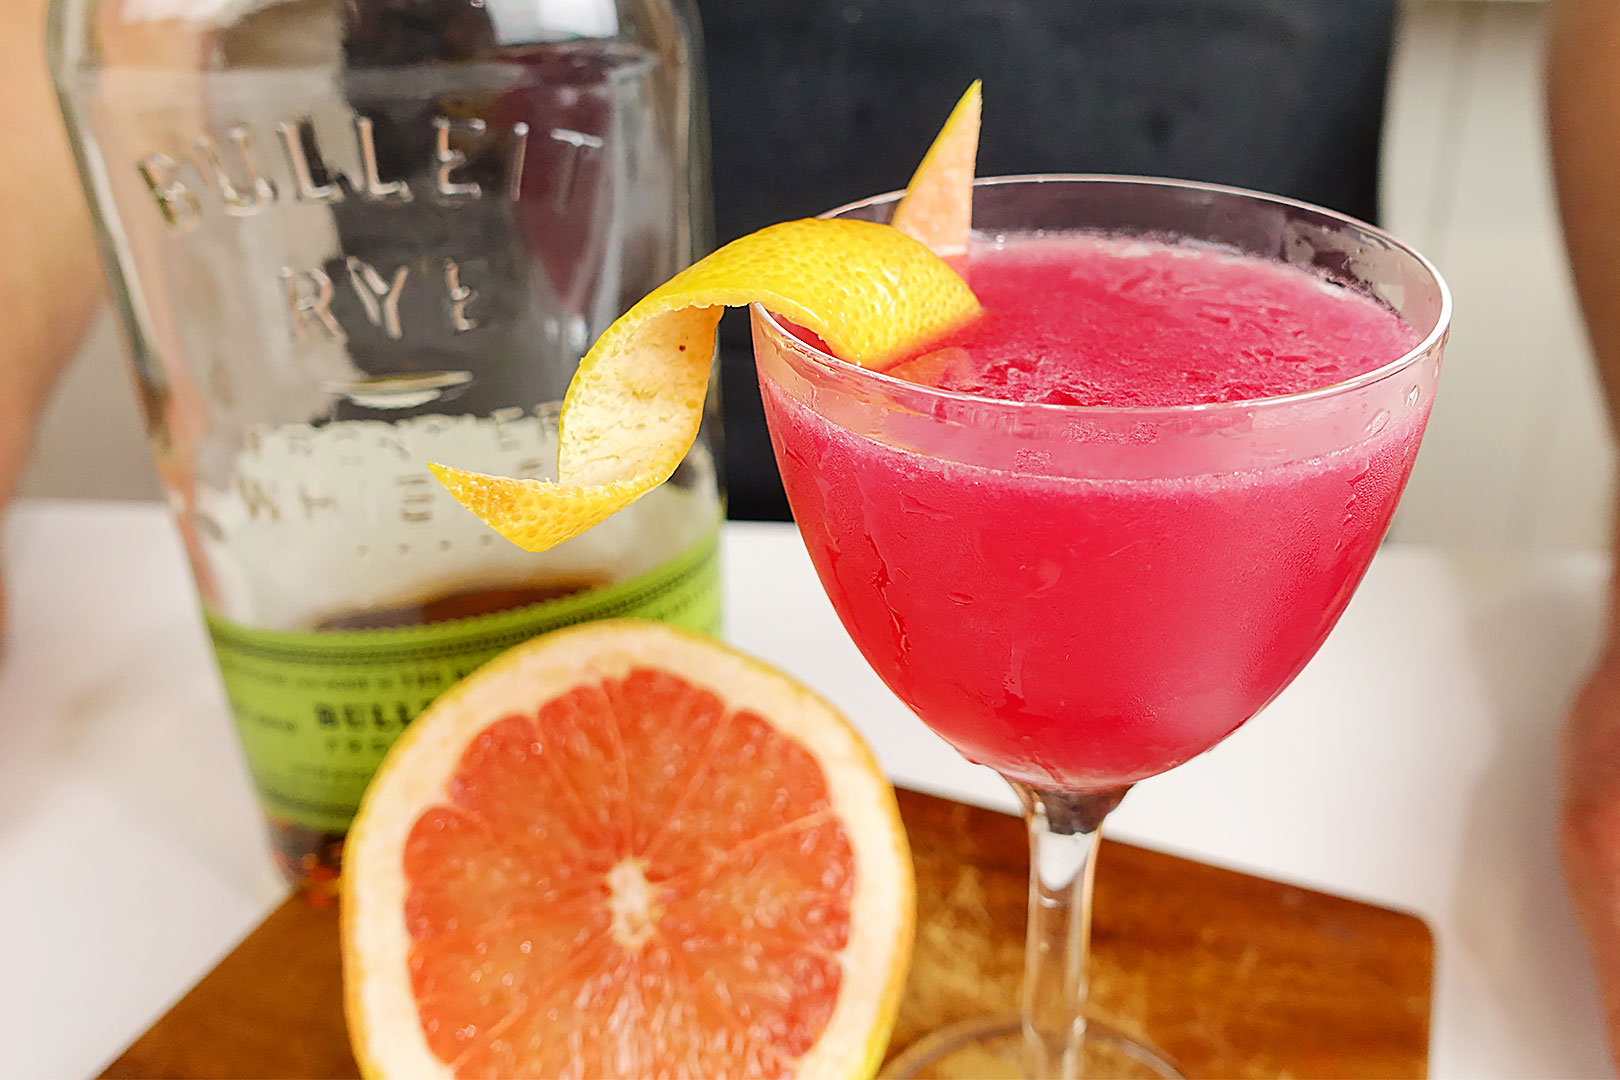 Blinker Rye Whiskey Cocktail Recipe - Rye, Raspberry Syrup and Grapefruit